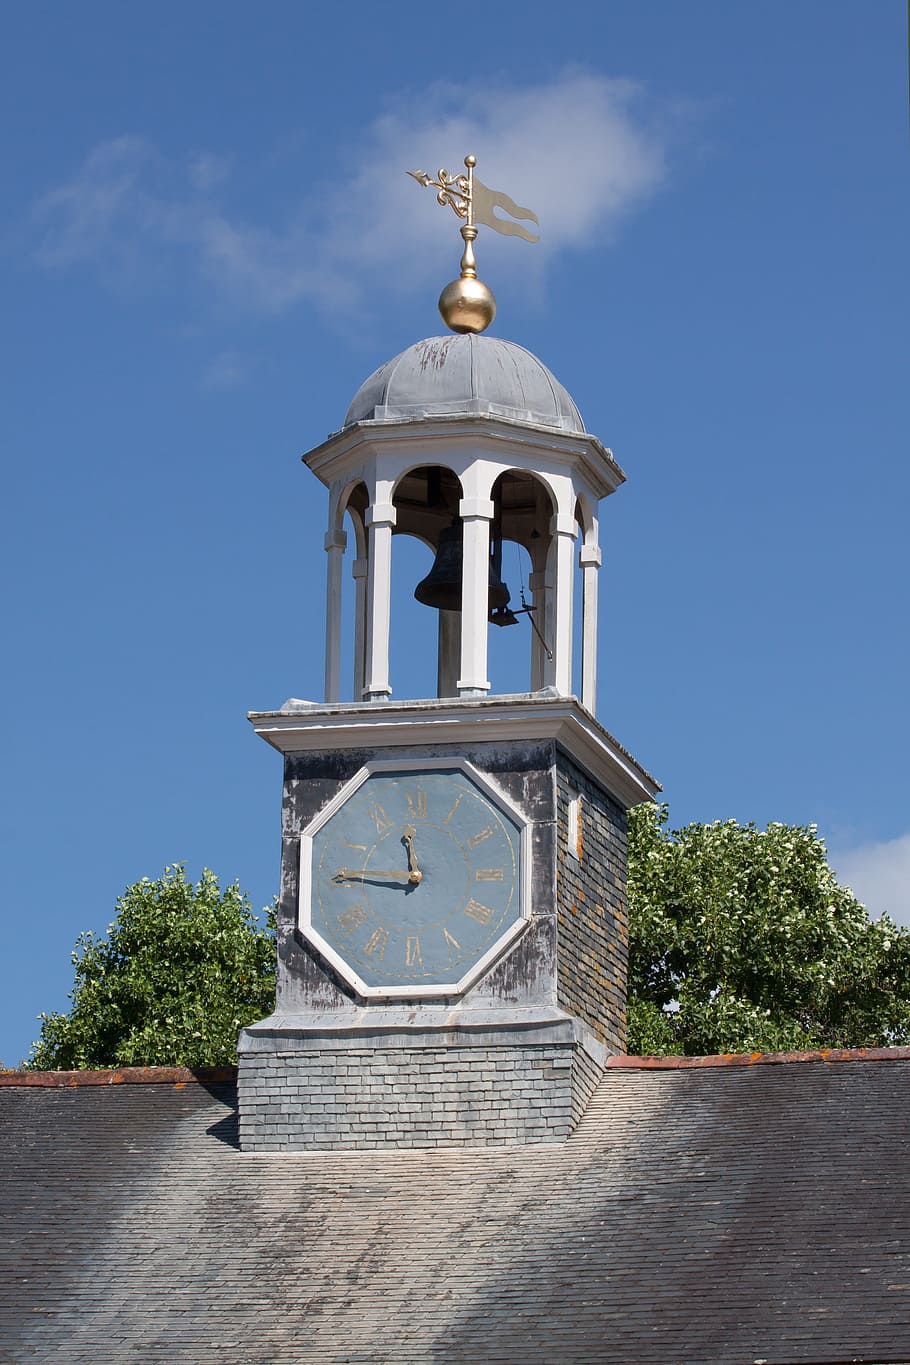 Turret, Columnar, Clock, about, octagonal, pointer, gold, roman numerals